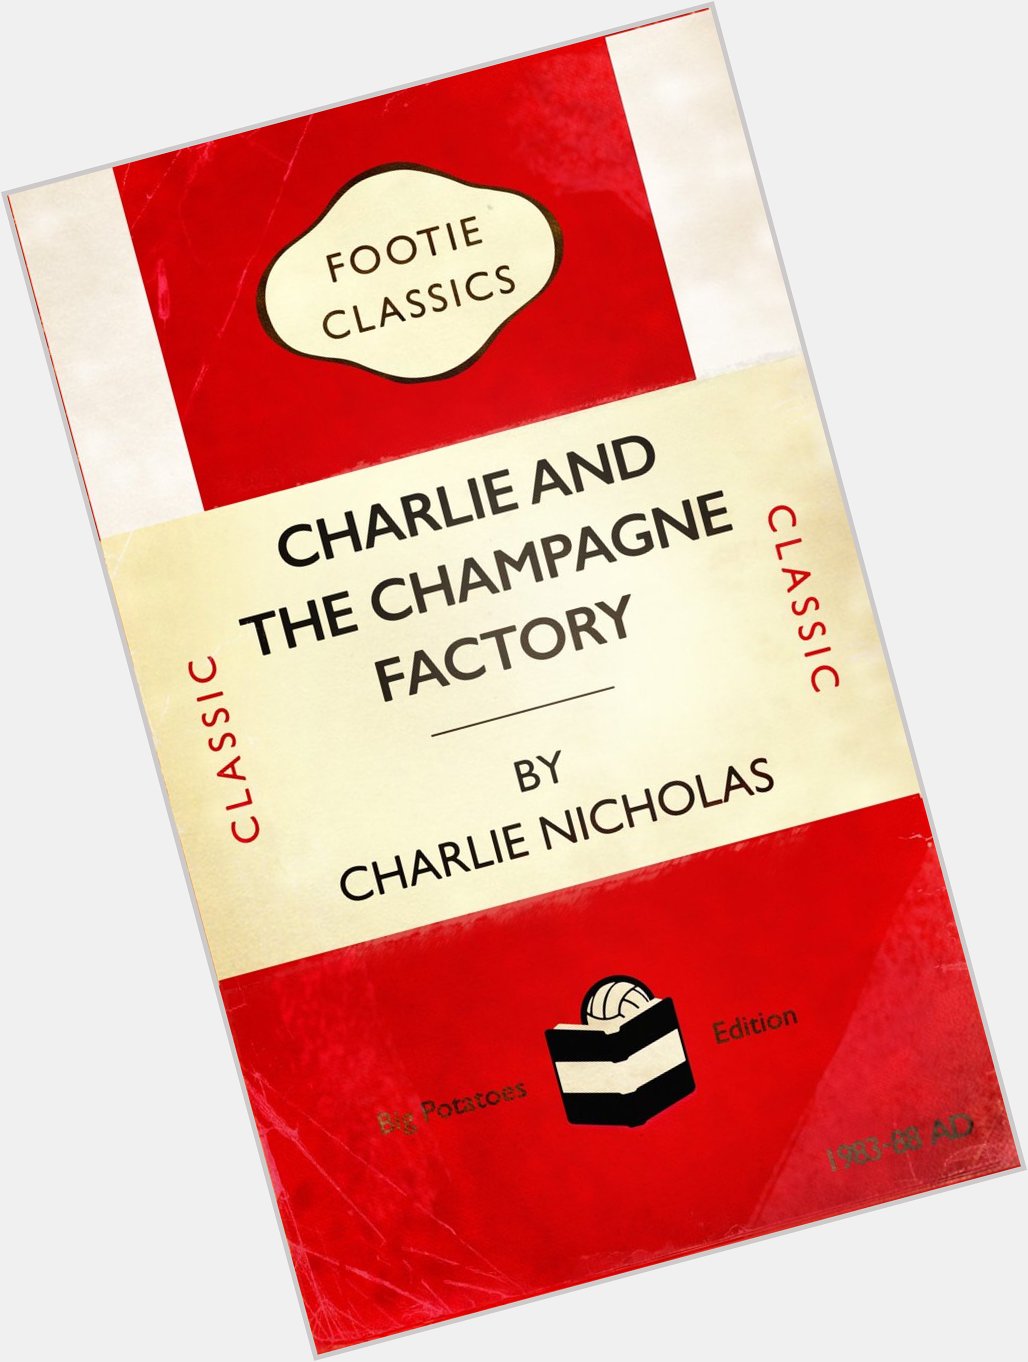 Happy Birthday to Champagne Charlie Nicholas.  